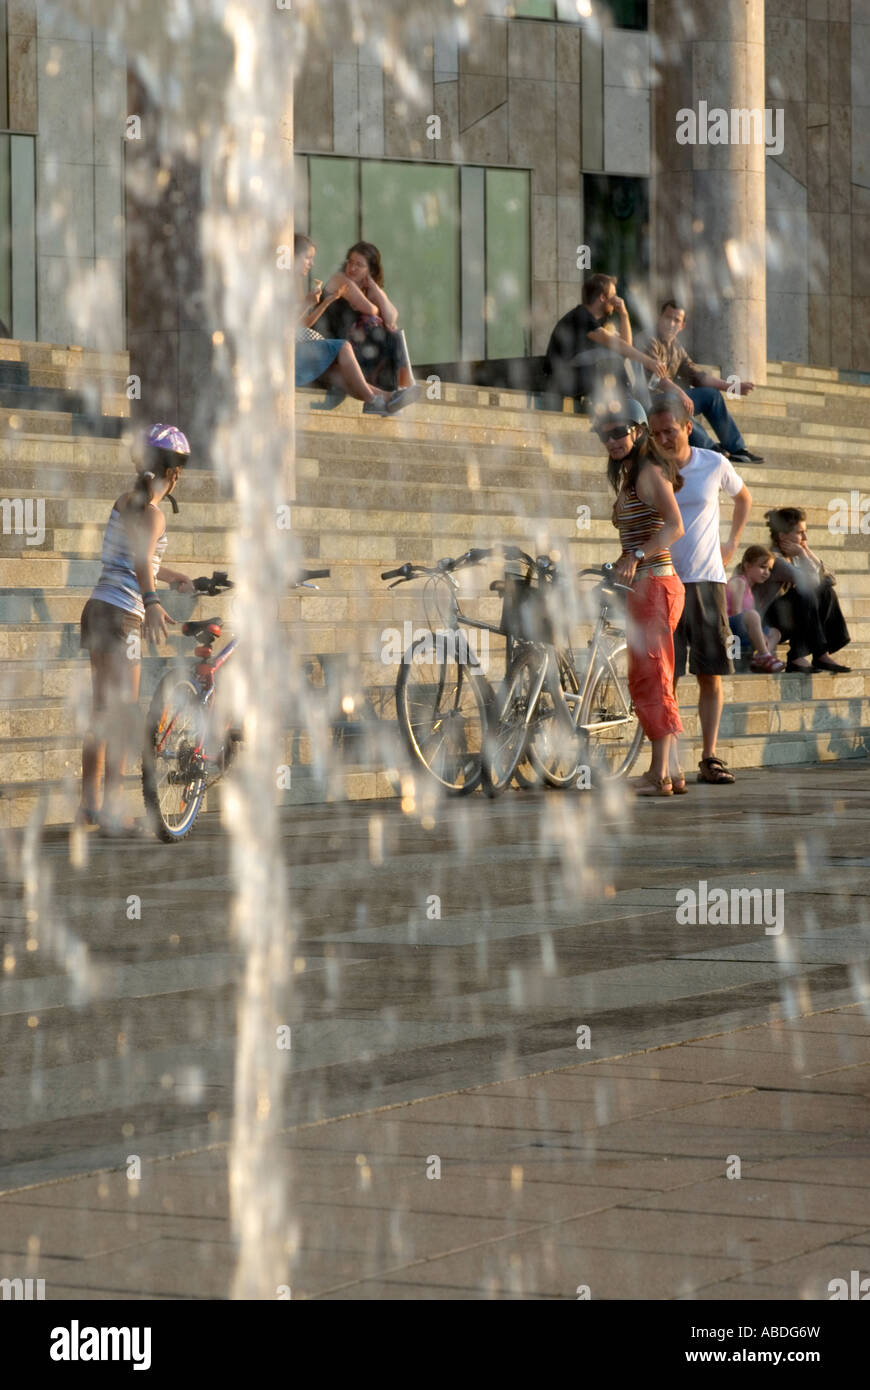 Fountain and People at the Palace of Arts Muveszetek Palotaja Budapest Hungary Europe Stock Photo